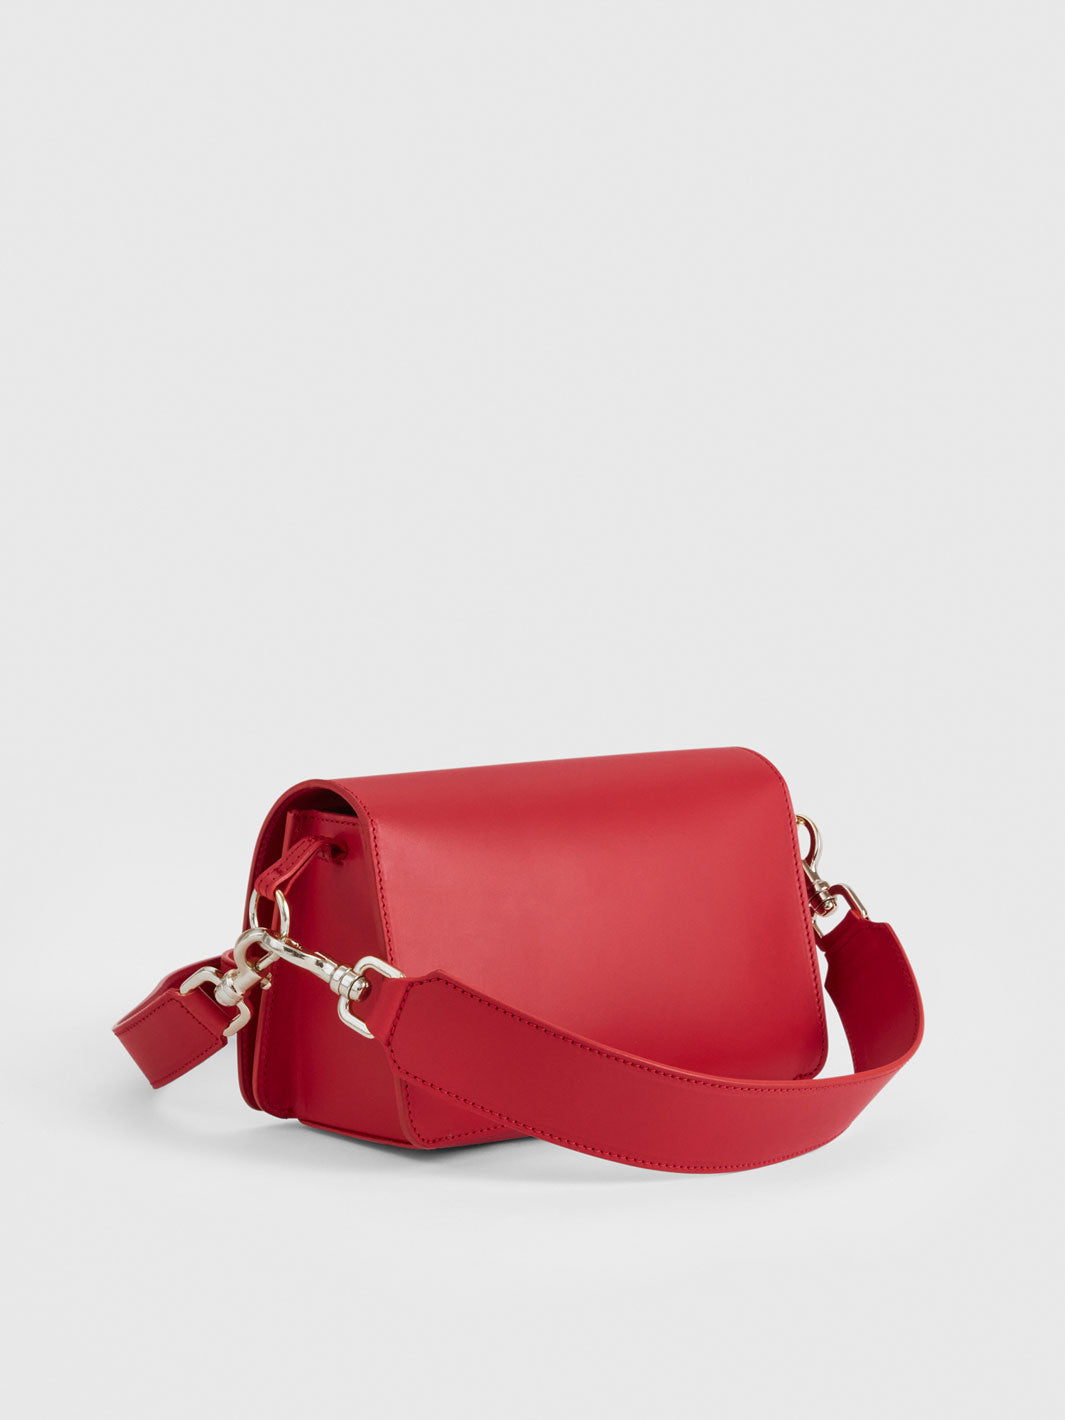 Zara | Bags | Zara Red Bag Used Once Slight Chip | Poshmark